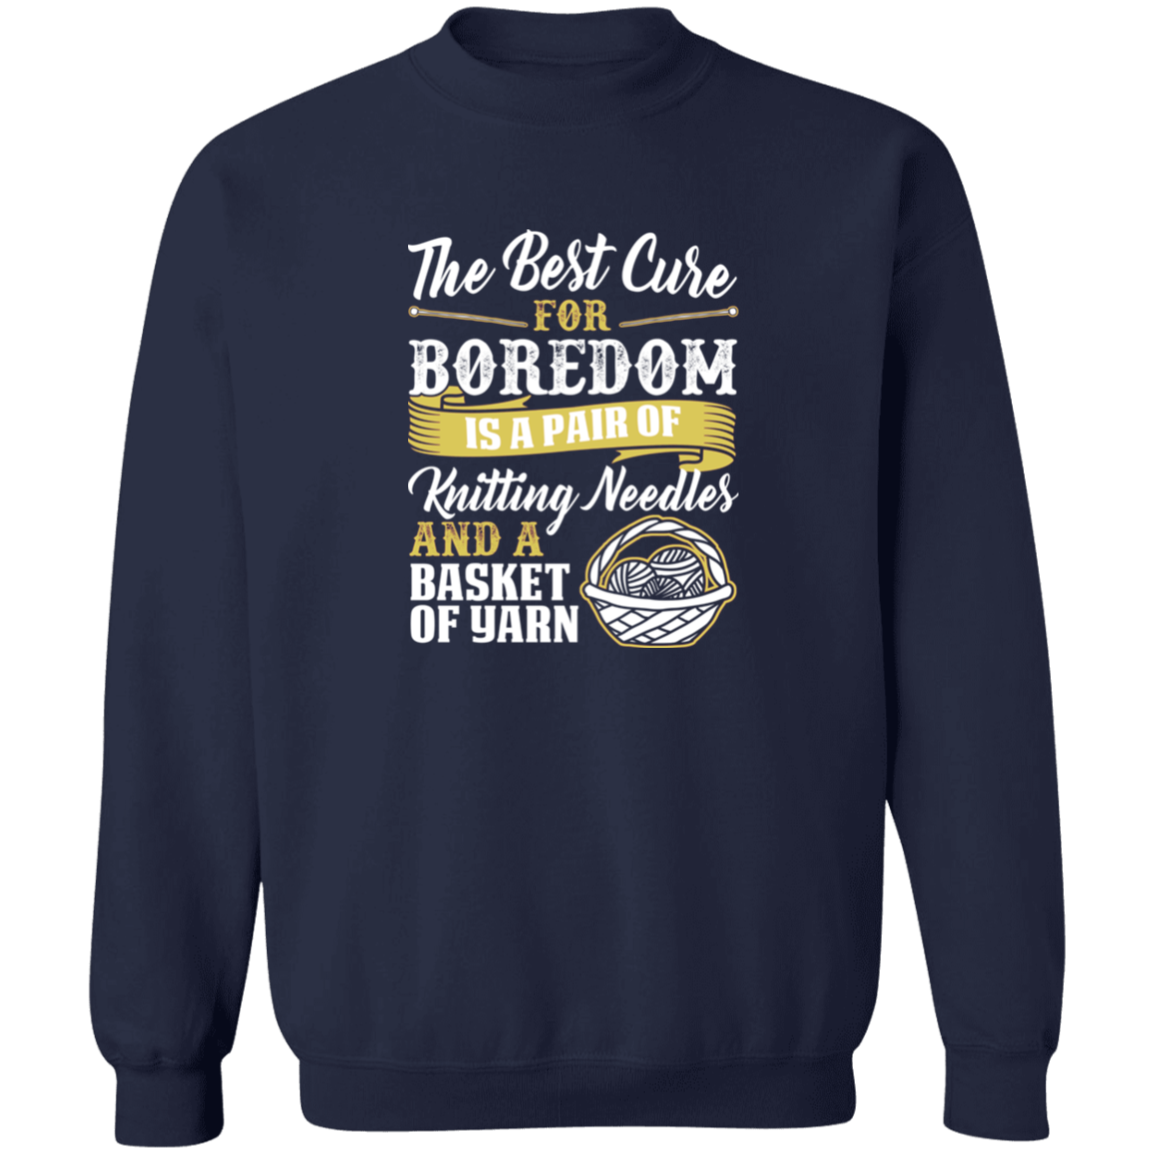 Cure For Boredom - Knitting - gold Sweatshirt